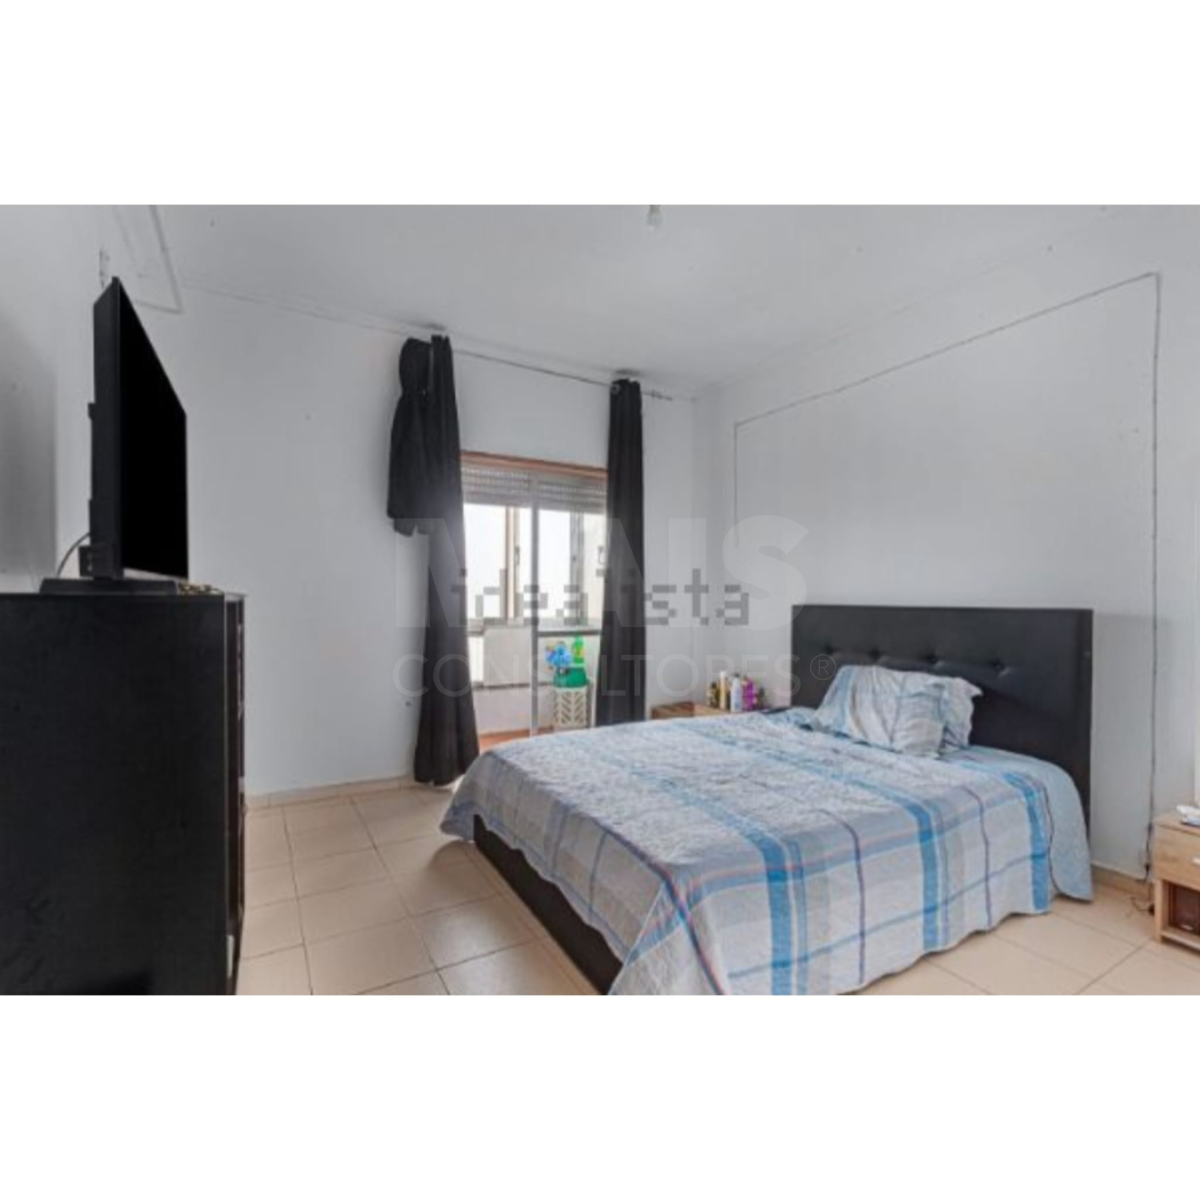 3 bedroom apartment in laranjeiro with 2 balconies